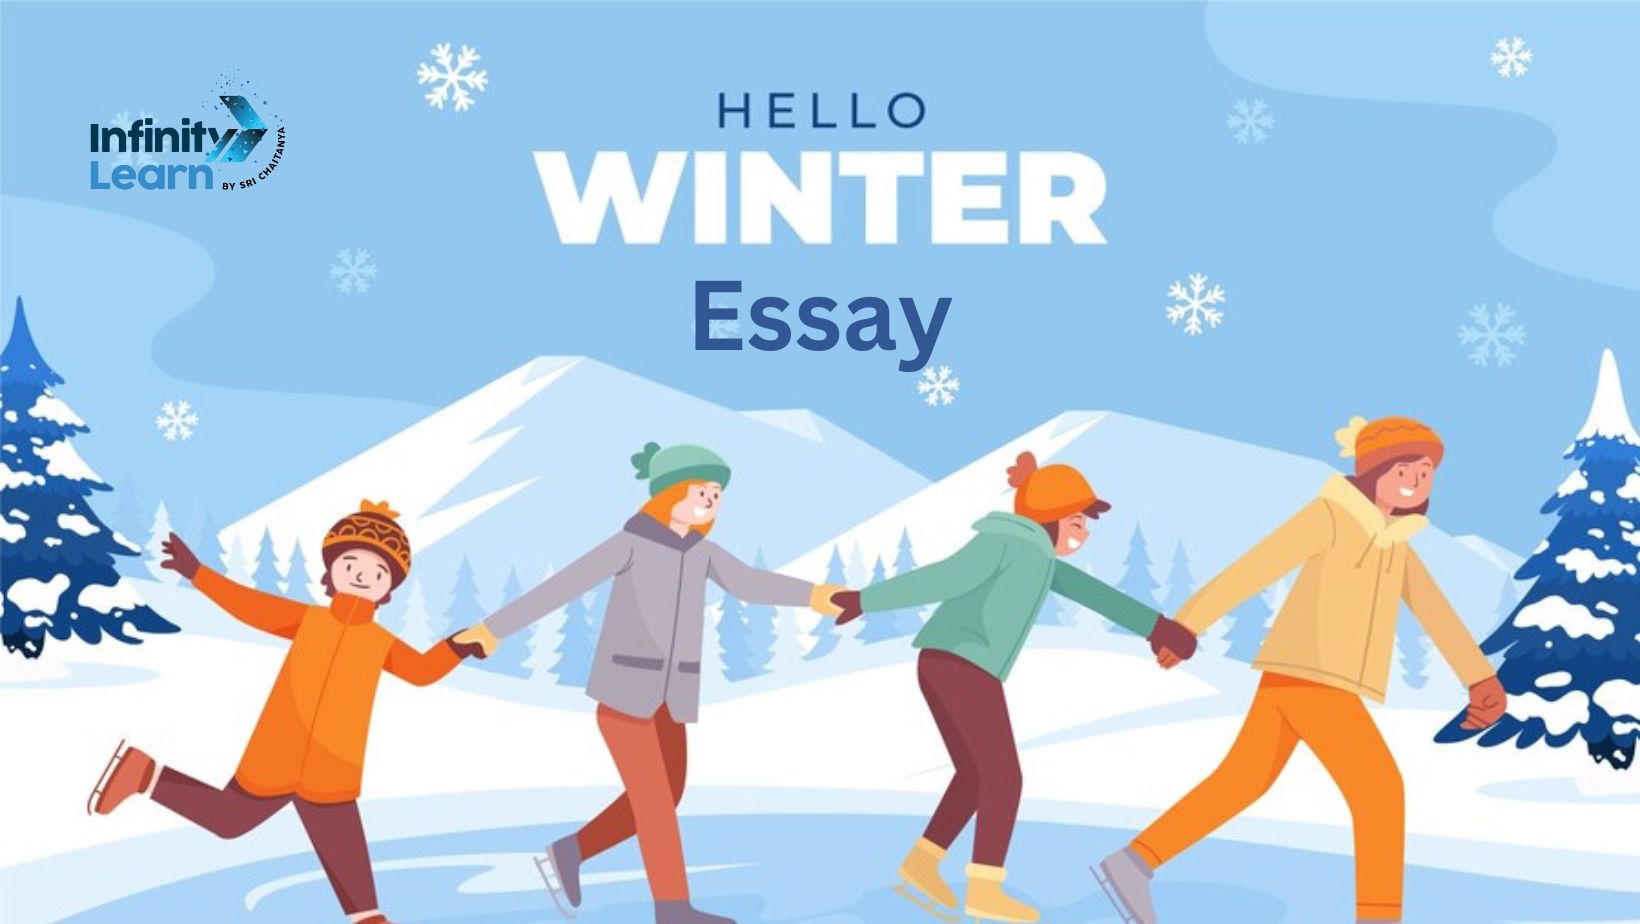 Essay on Winter Vacation